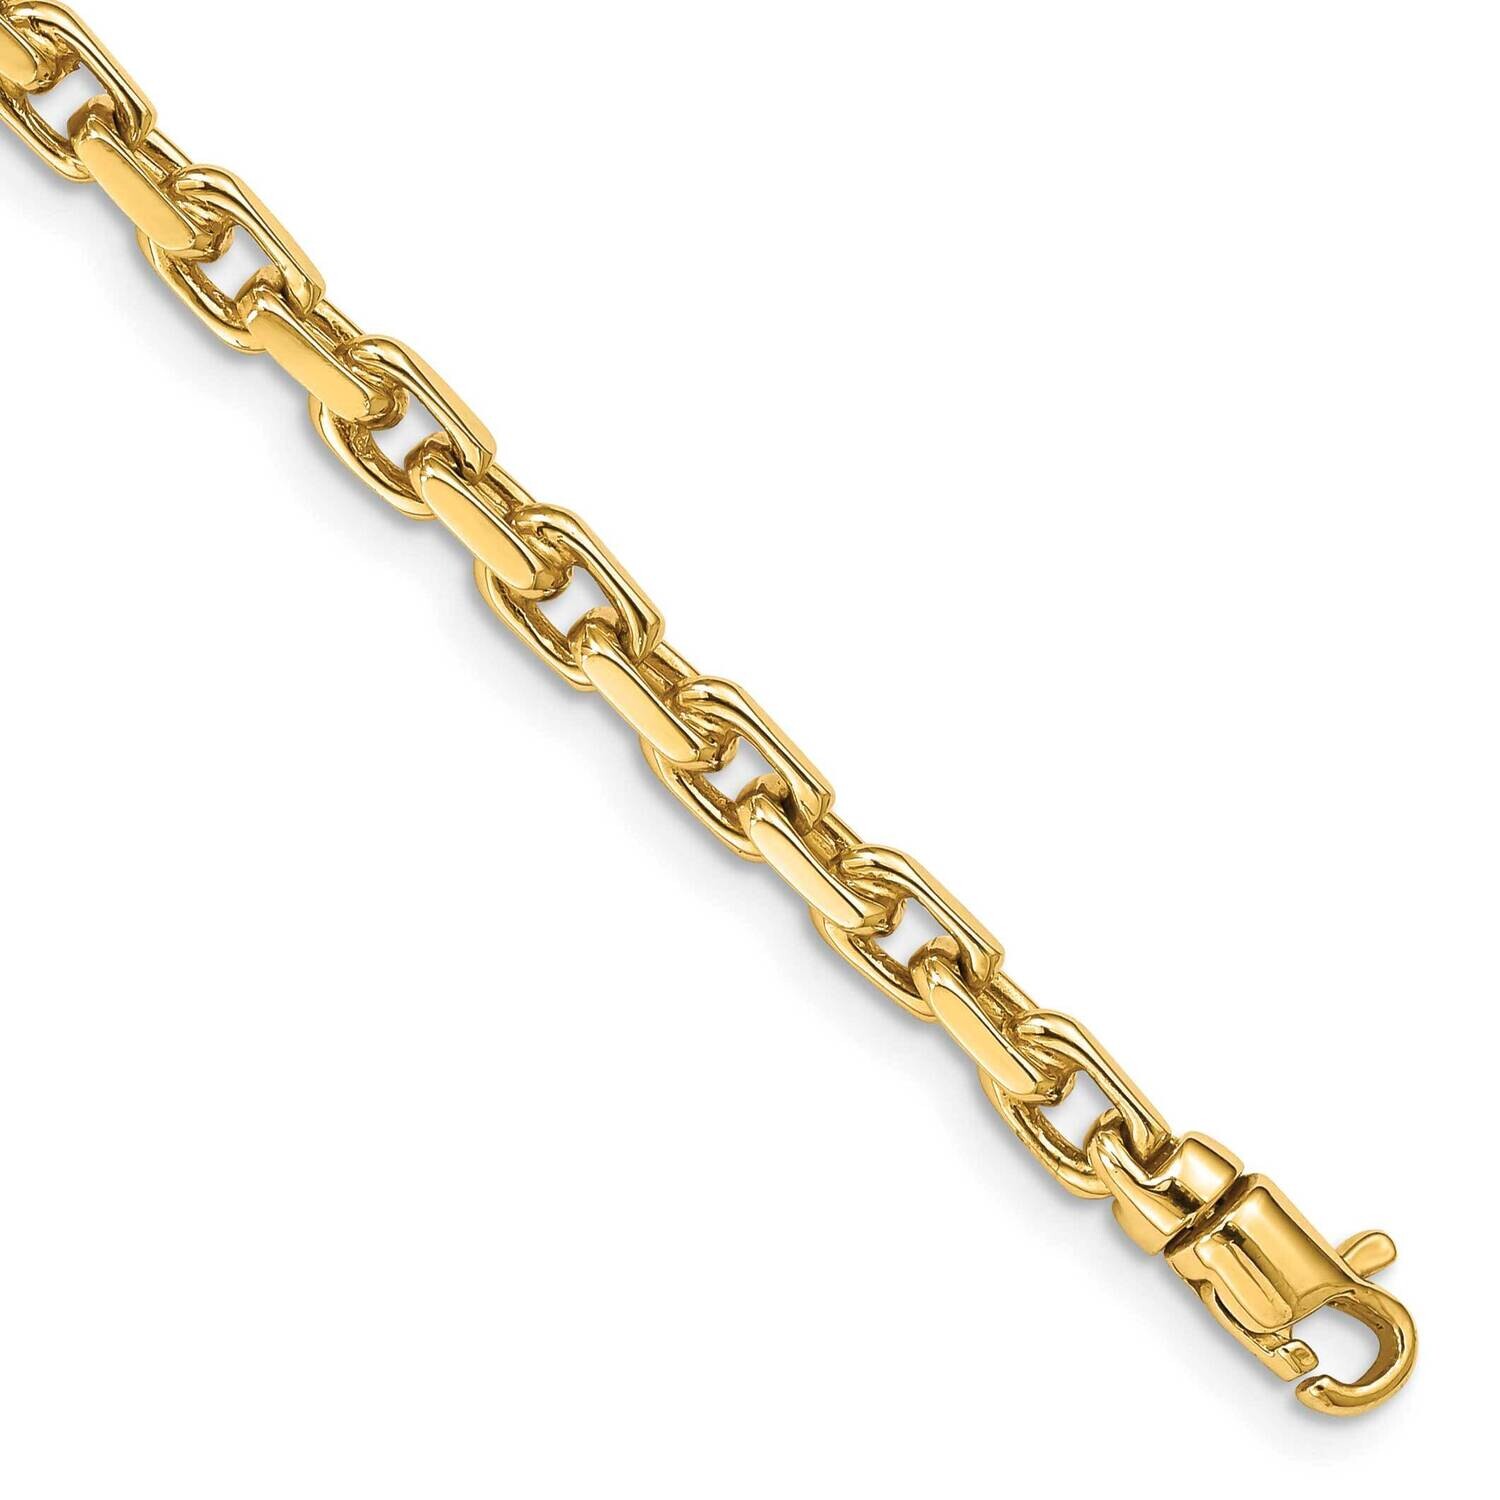 4.2mm Hand-Polished Fancy Link Chain 7 Inch 10k Gold 10LK302-7